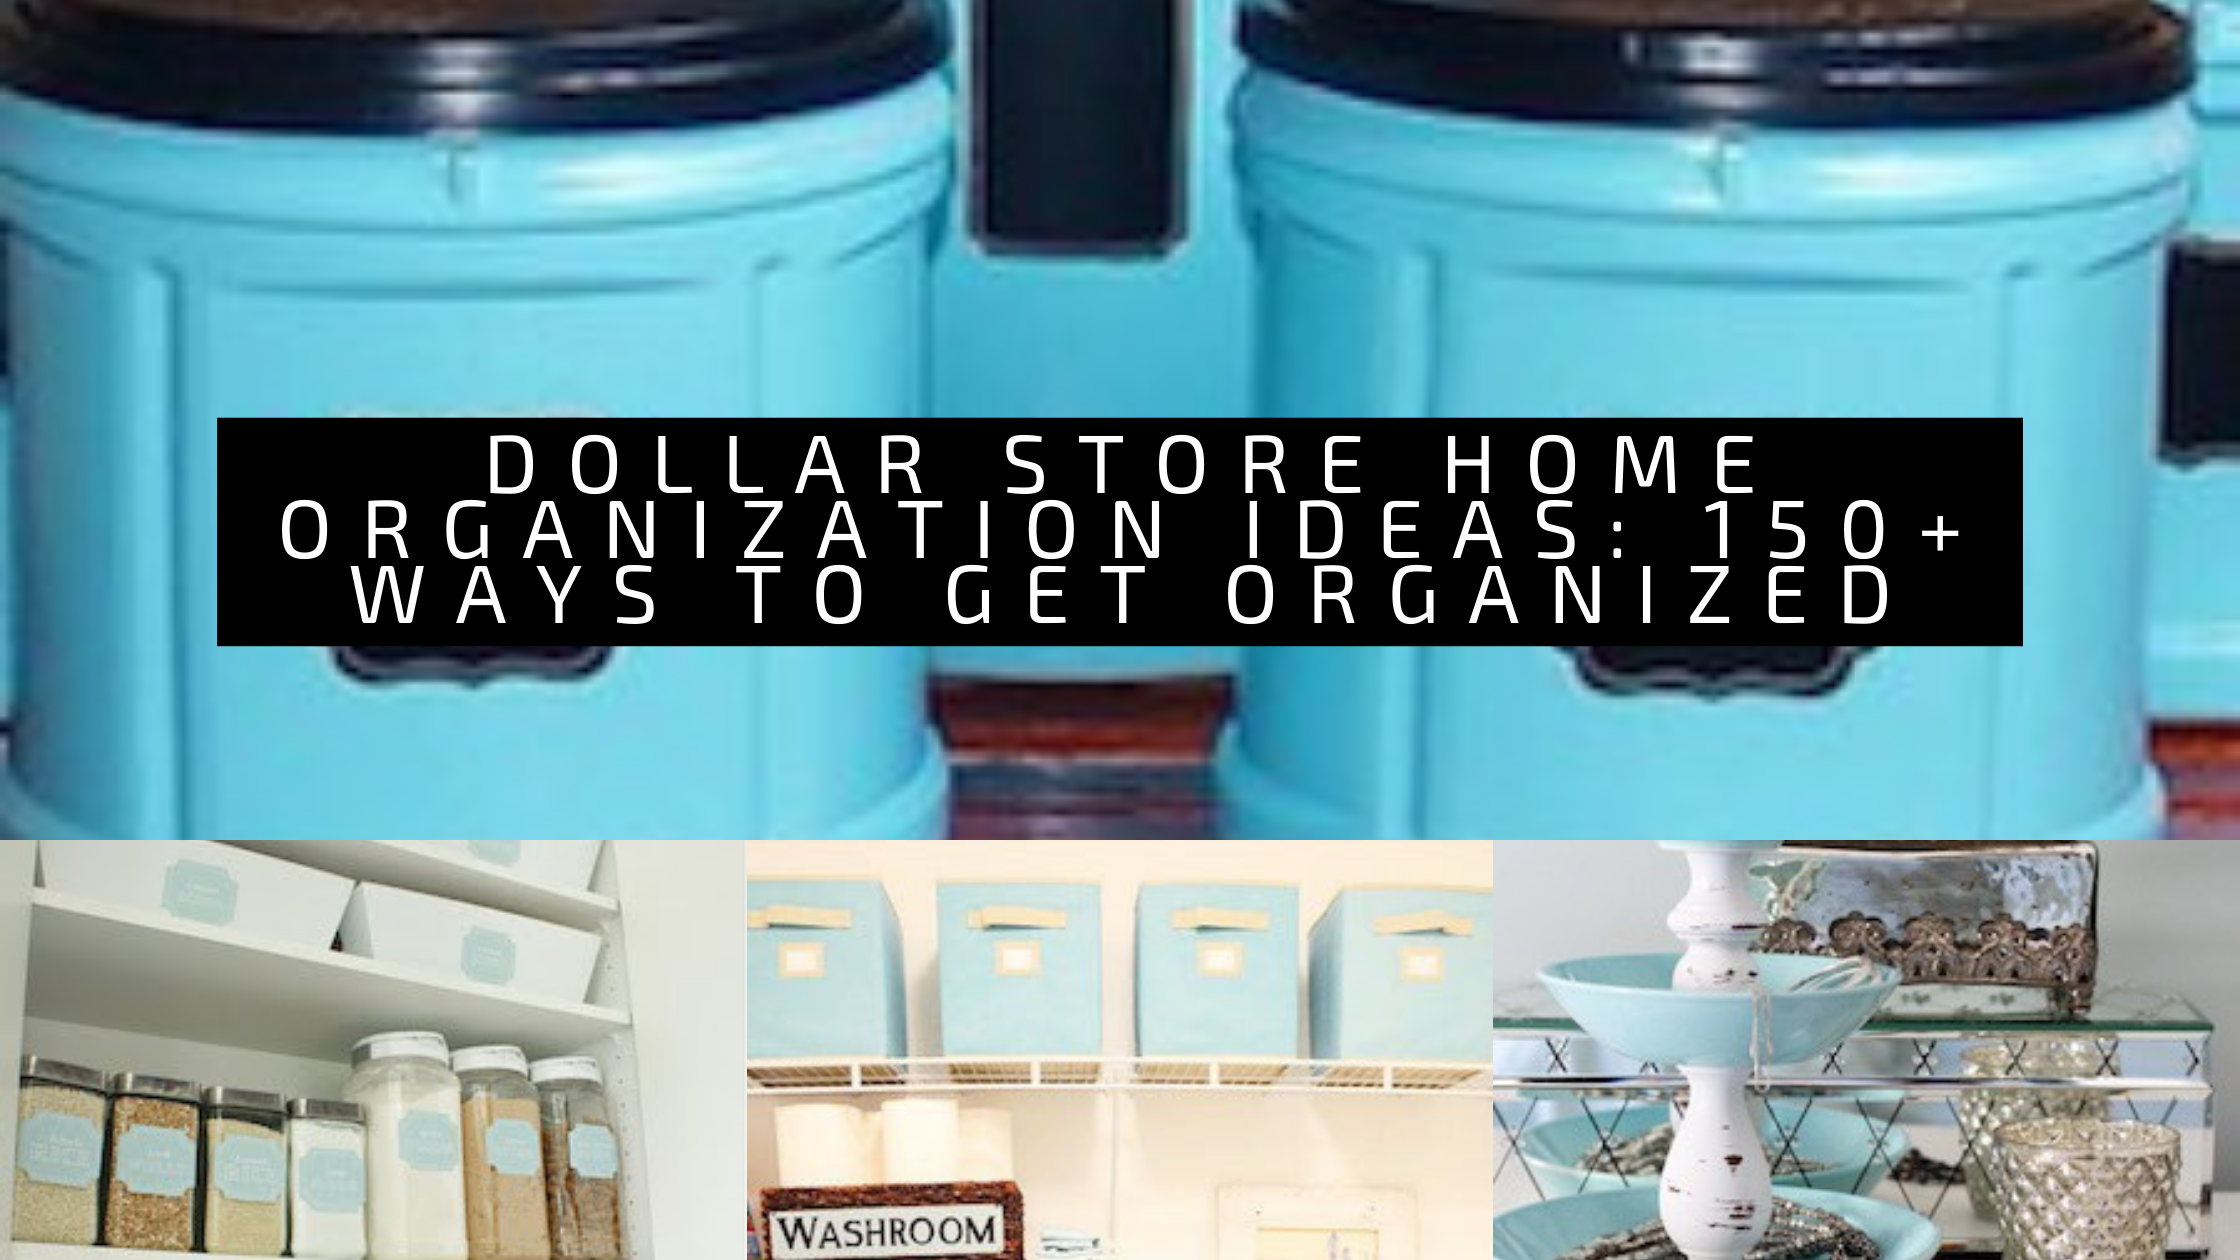 Dollar Store Home Organization Ideas: 150+ Ways to Get Organized 20